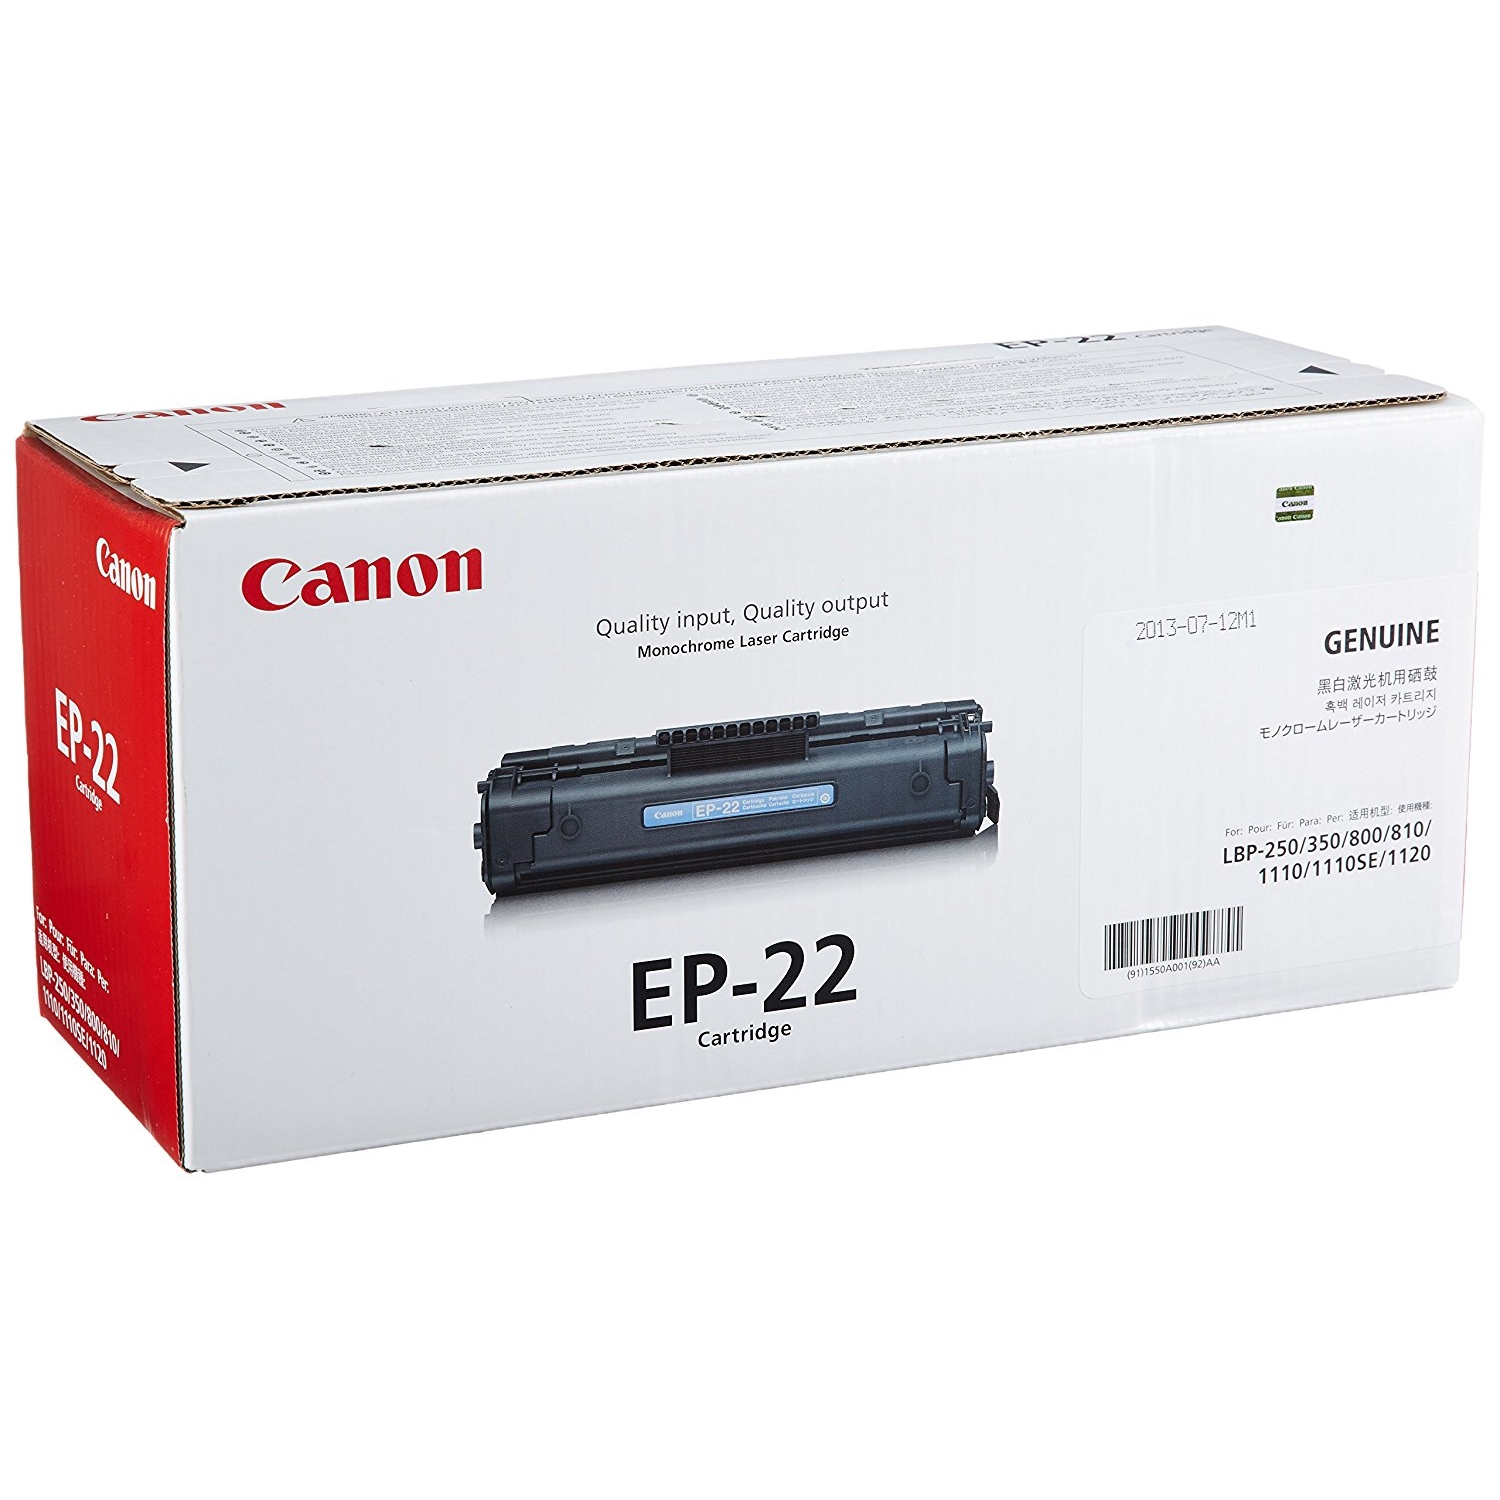 Original Canon EP-22 Black Toner Cartridge (1550A003AA/BA)